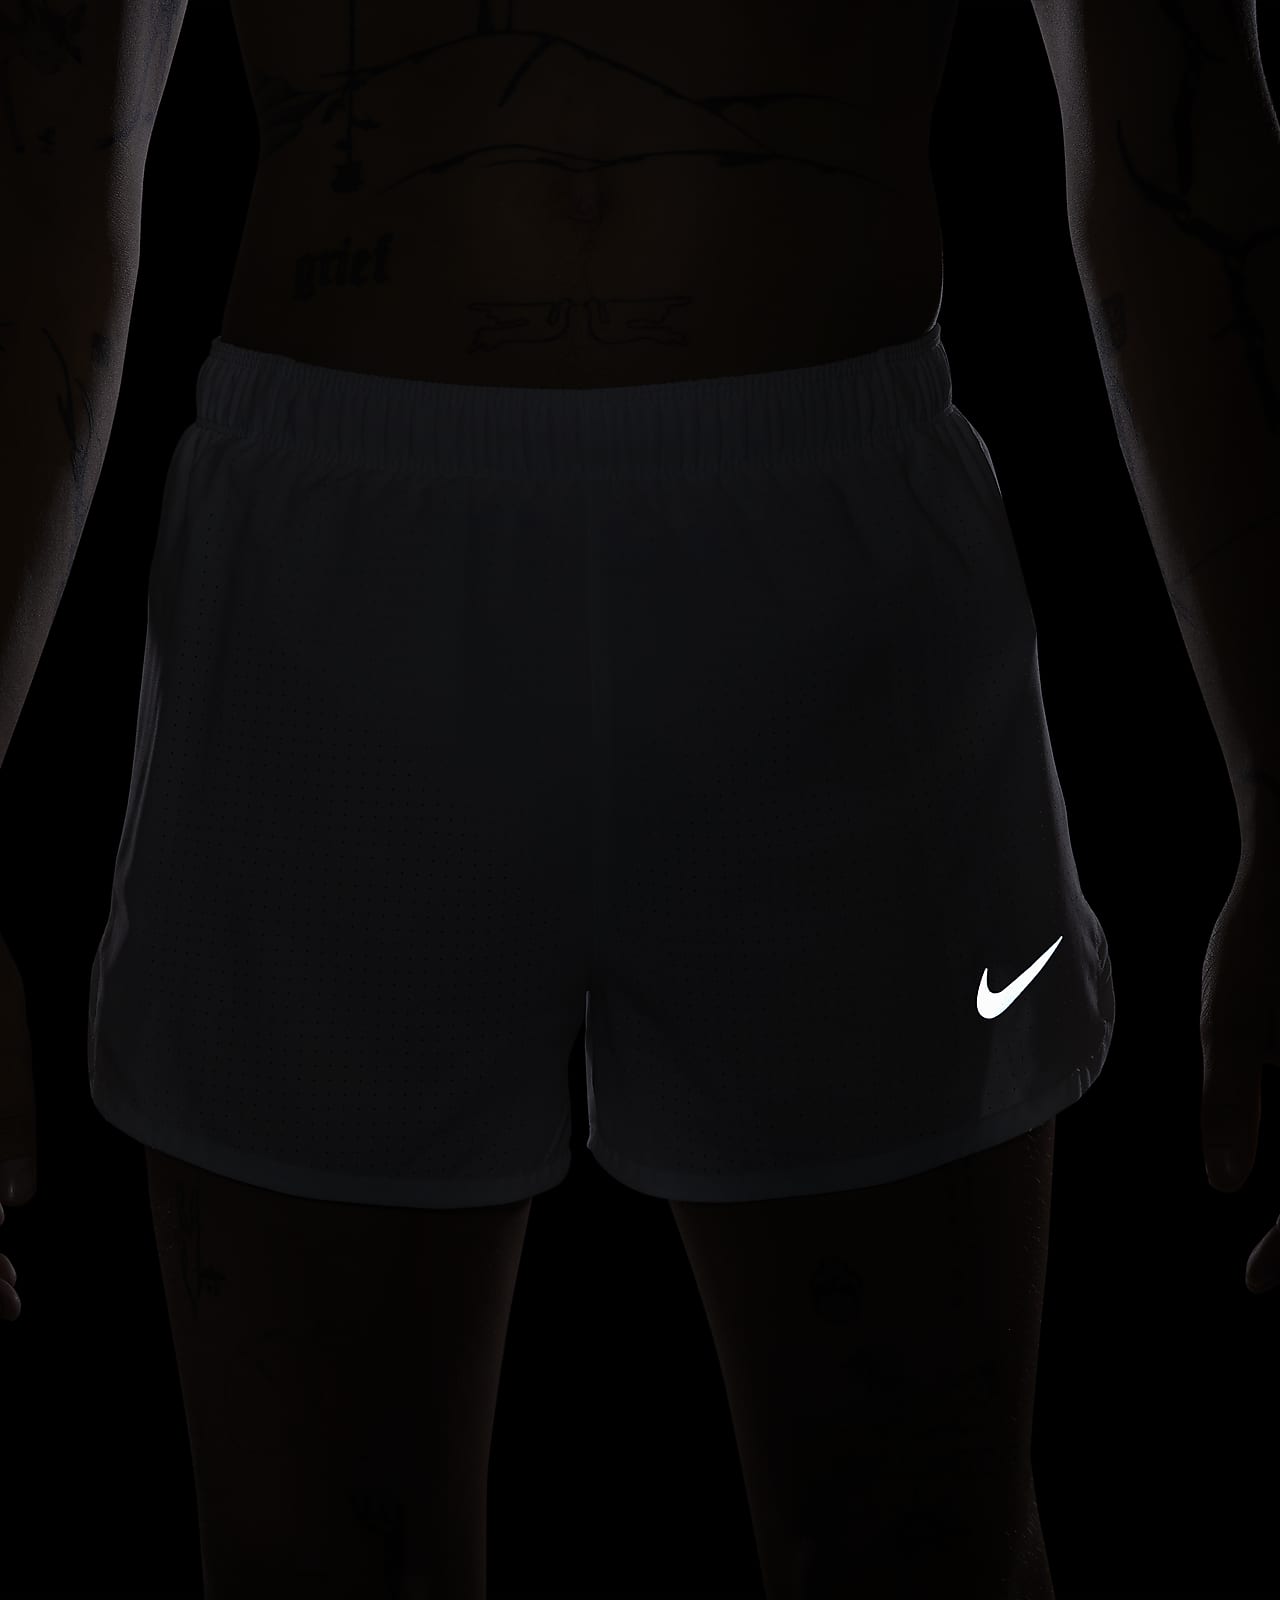 Nike Running Eclipse 2-in-1 shorts in pink | ASOS